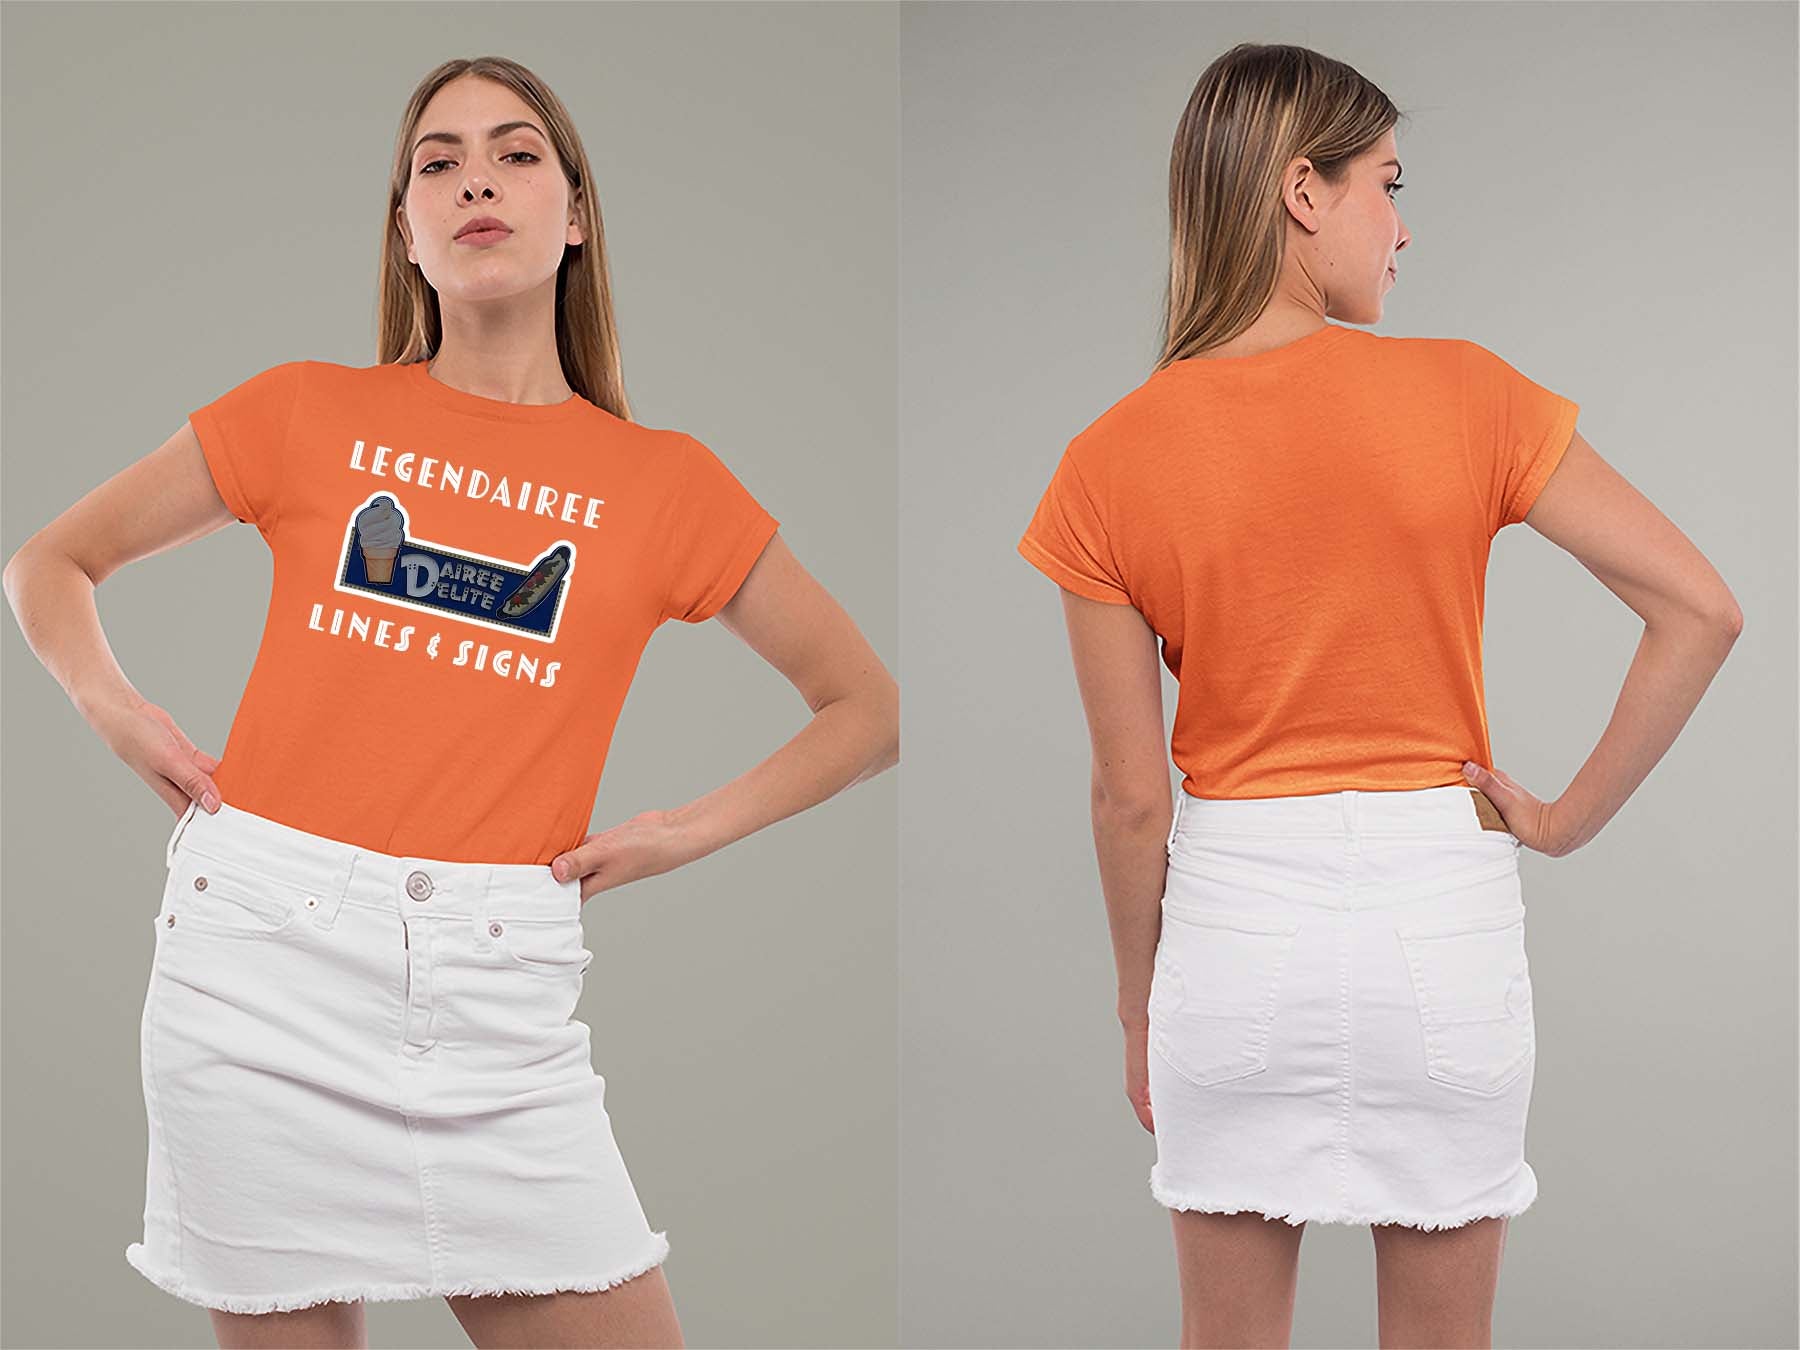 Legendairee Ladies Crew (Round) Neck Shirt Small Orange